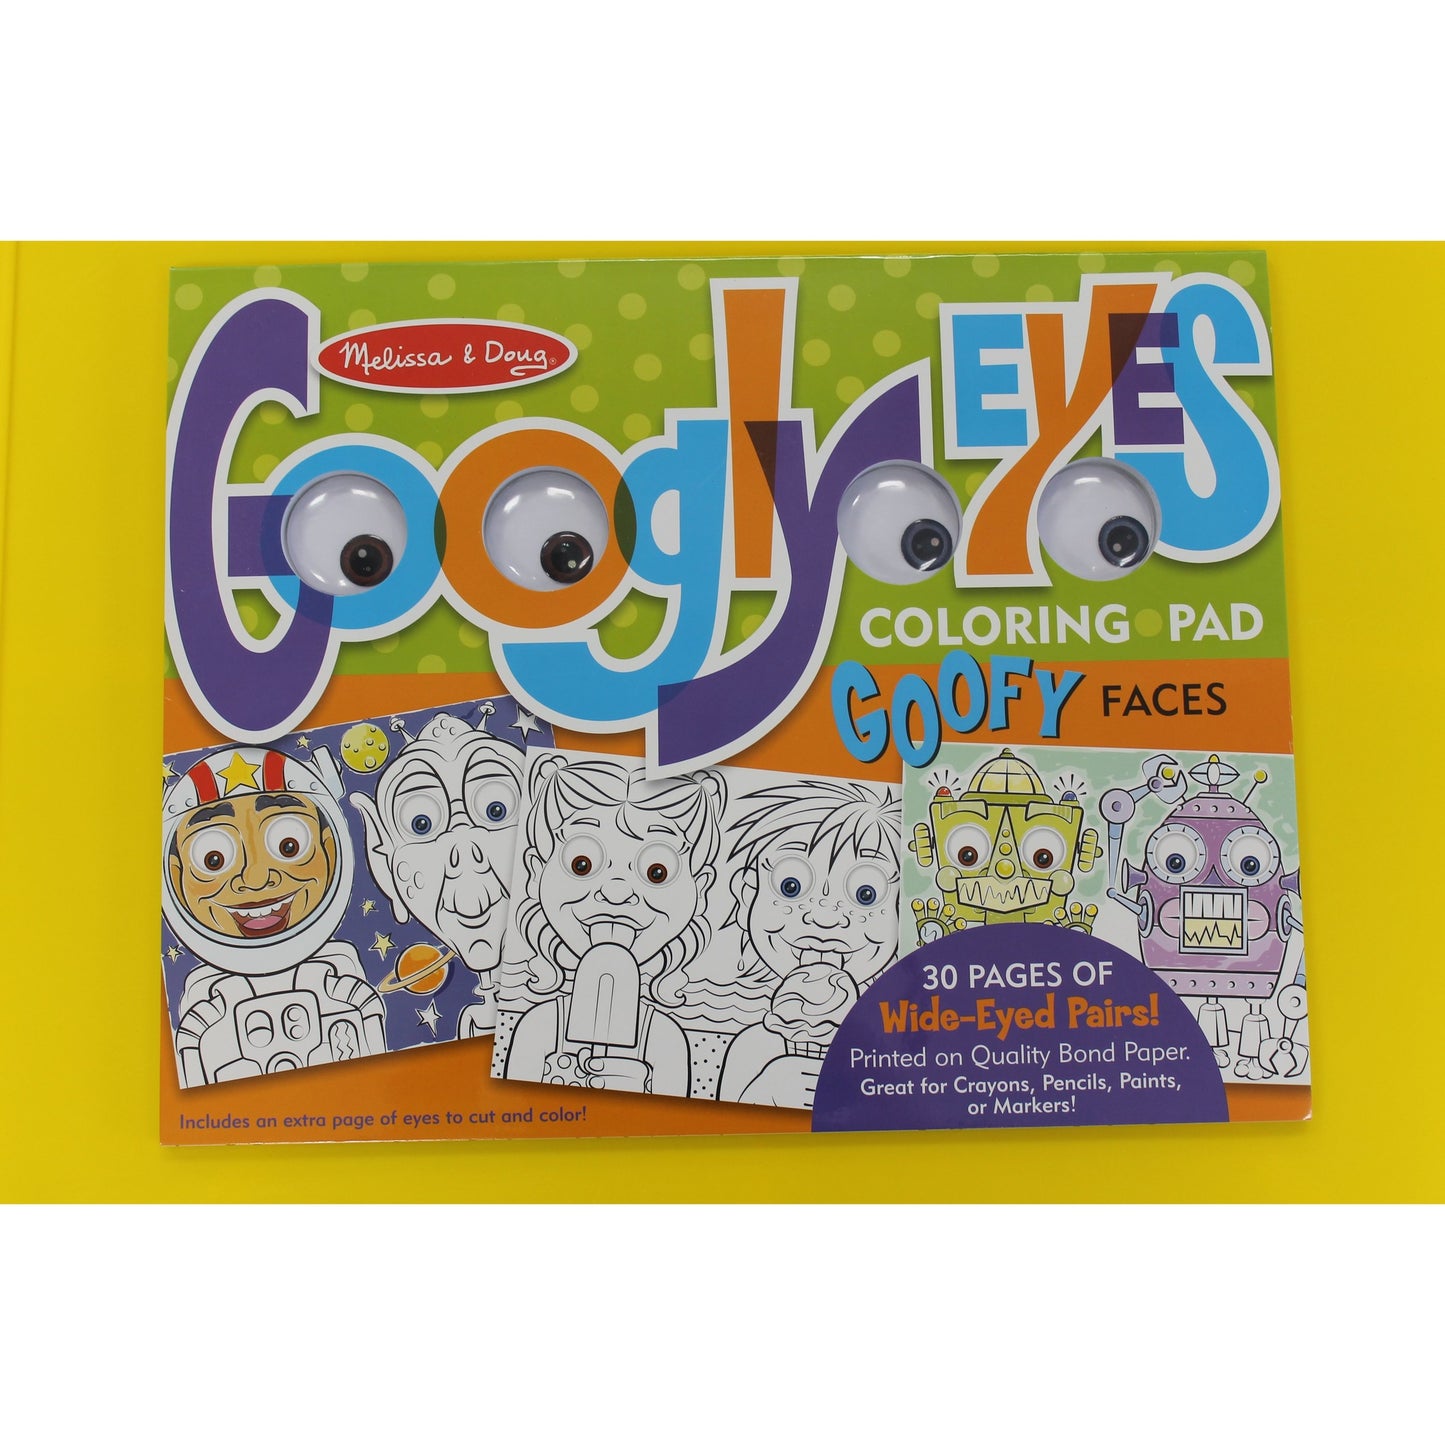 Goofy Faces - Googly Eyes Coloring Pad Gifts Melissa & Doug   